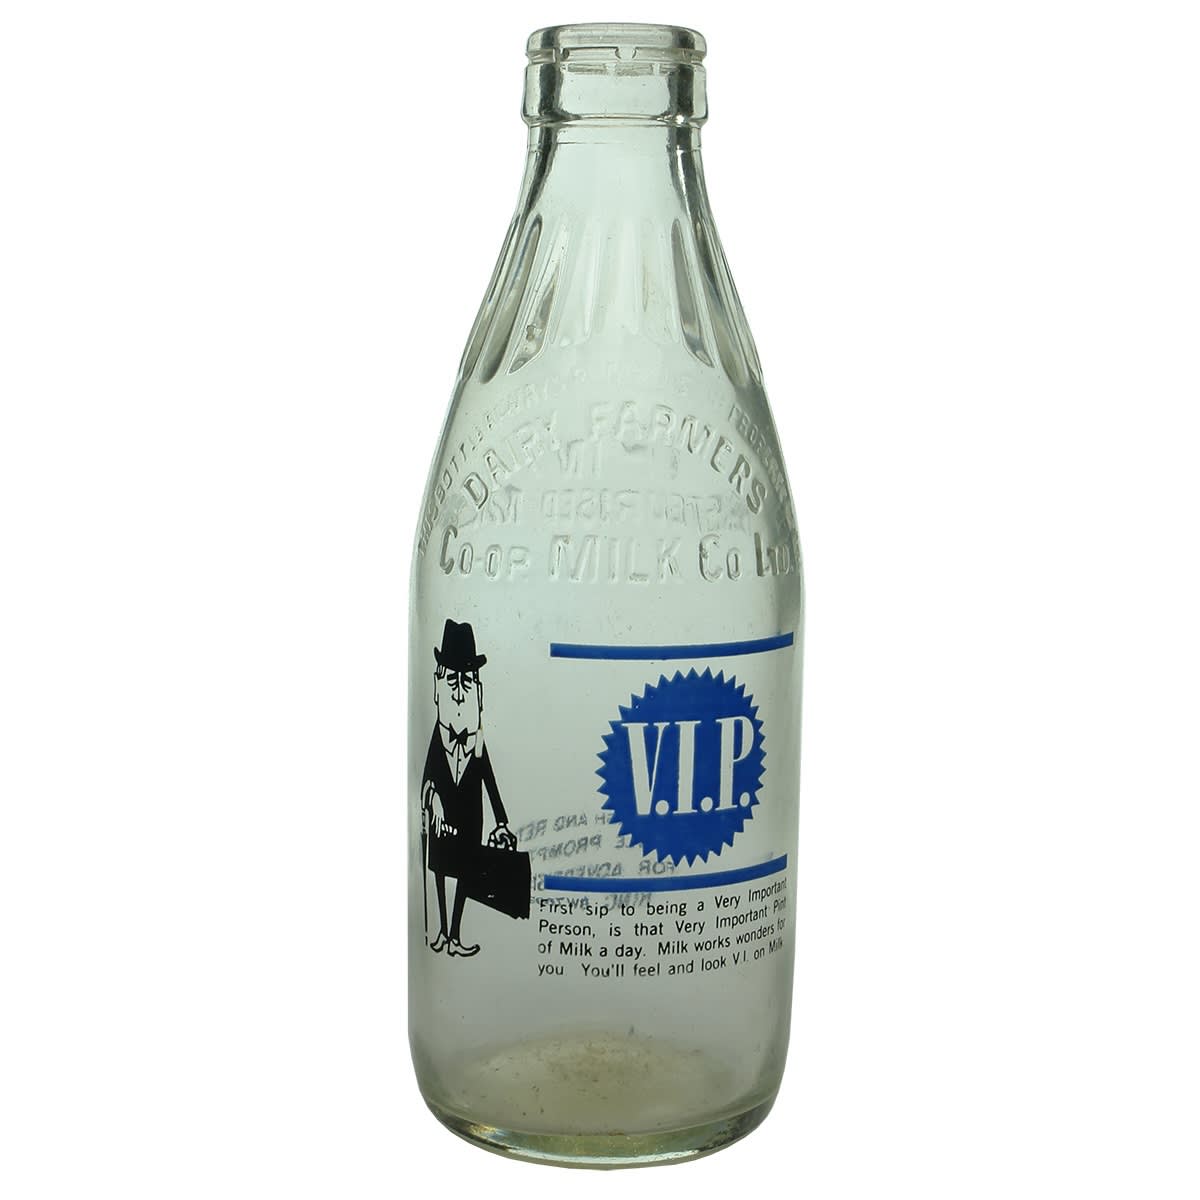 Milk. Dairy Farmers Co-Op Milk Co Ltd. V.I.P Ceramic Label. Foil Top. 1 Pint. (New South Wales)